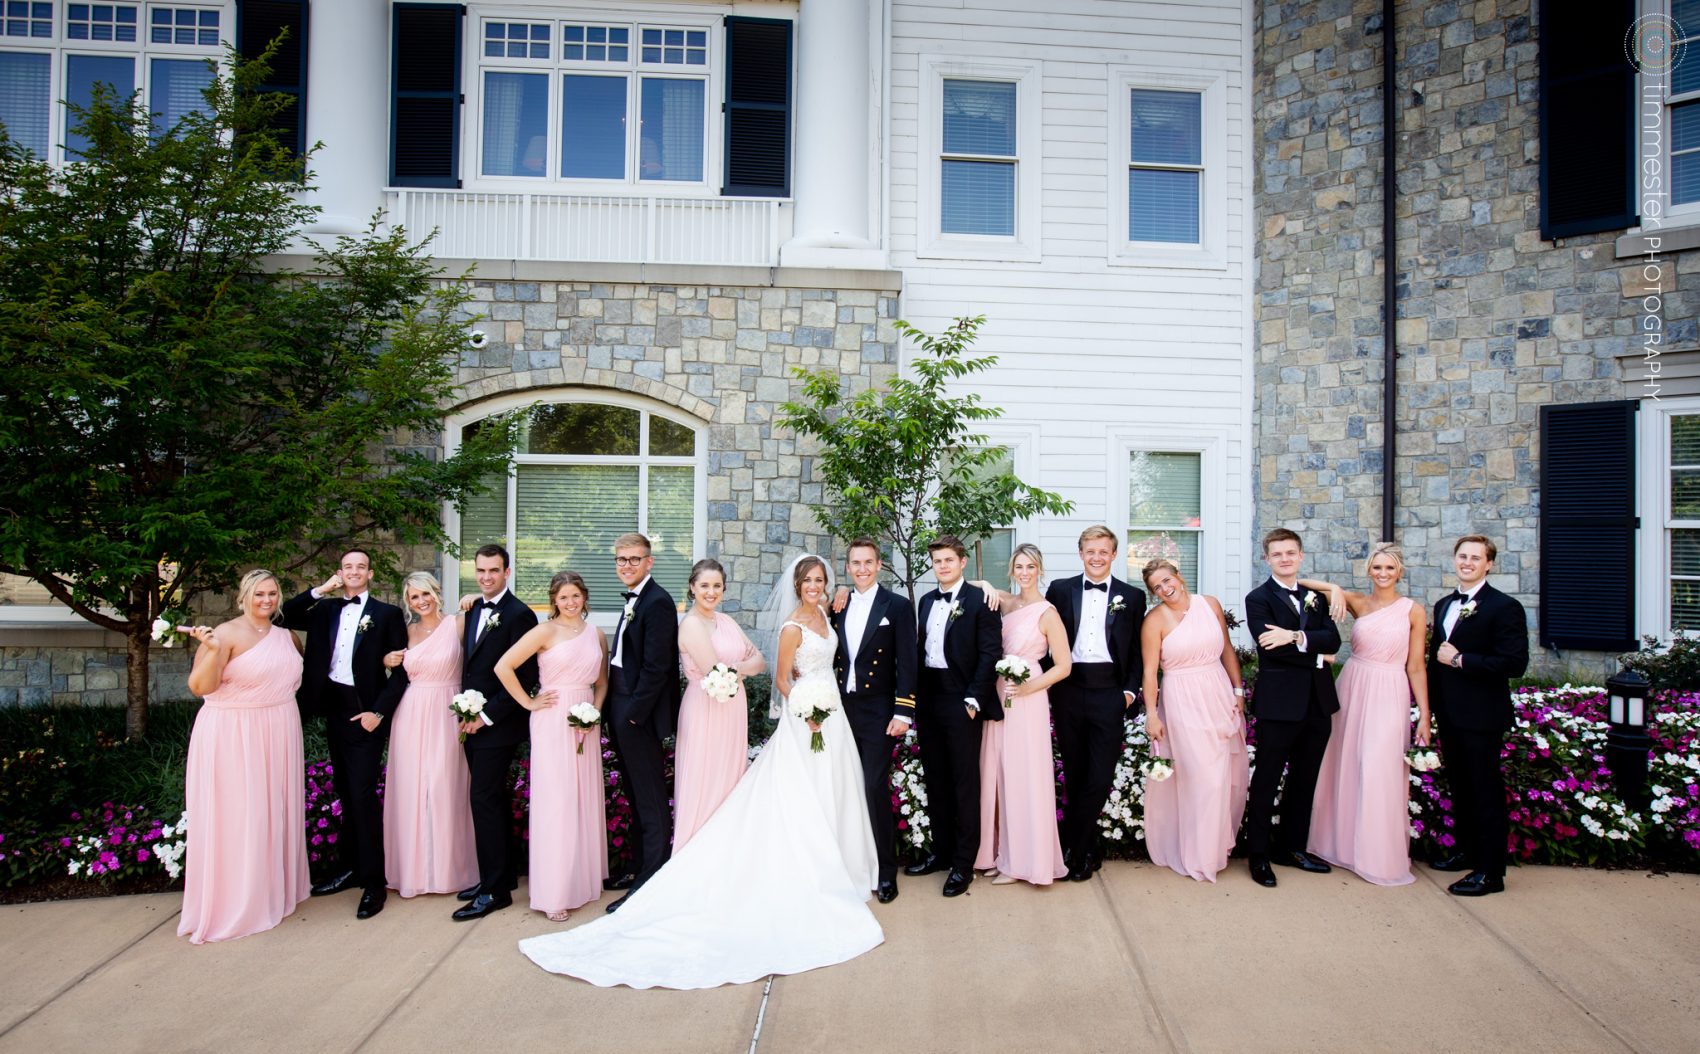 A beautiful wedding and bridal party at Army Navy Country Club in Arlington, Virginia near Washington, DC